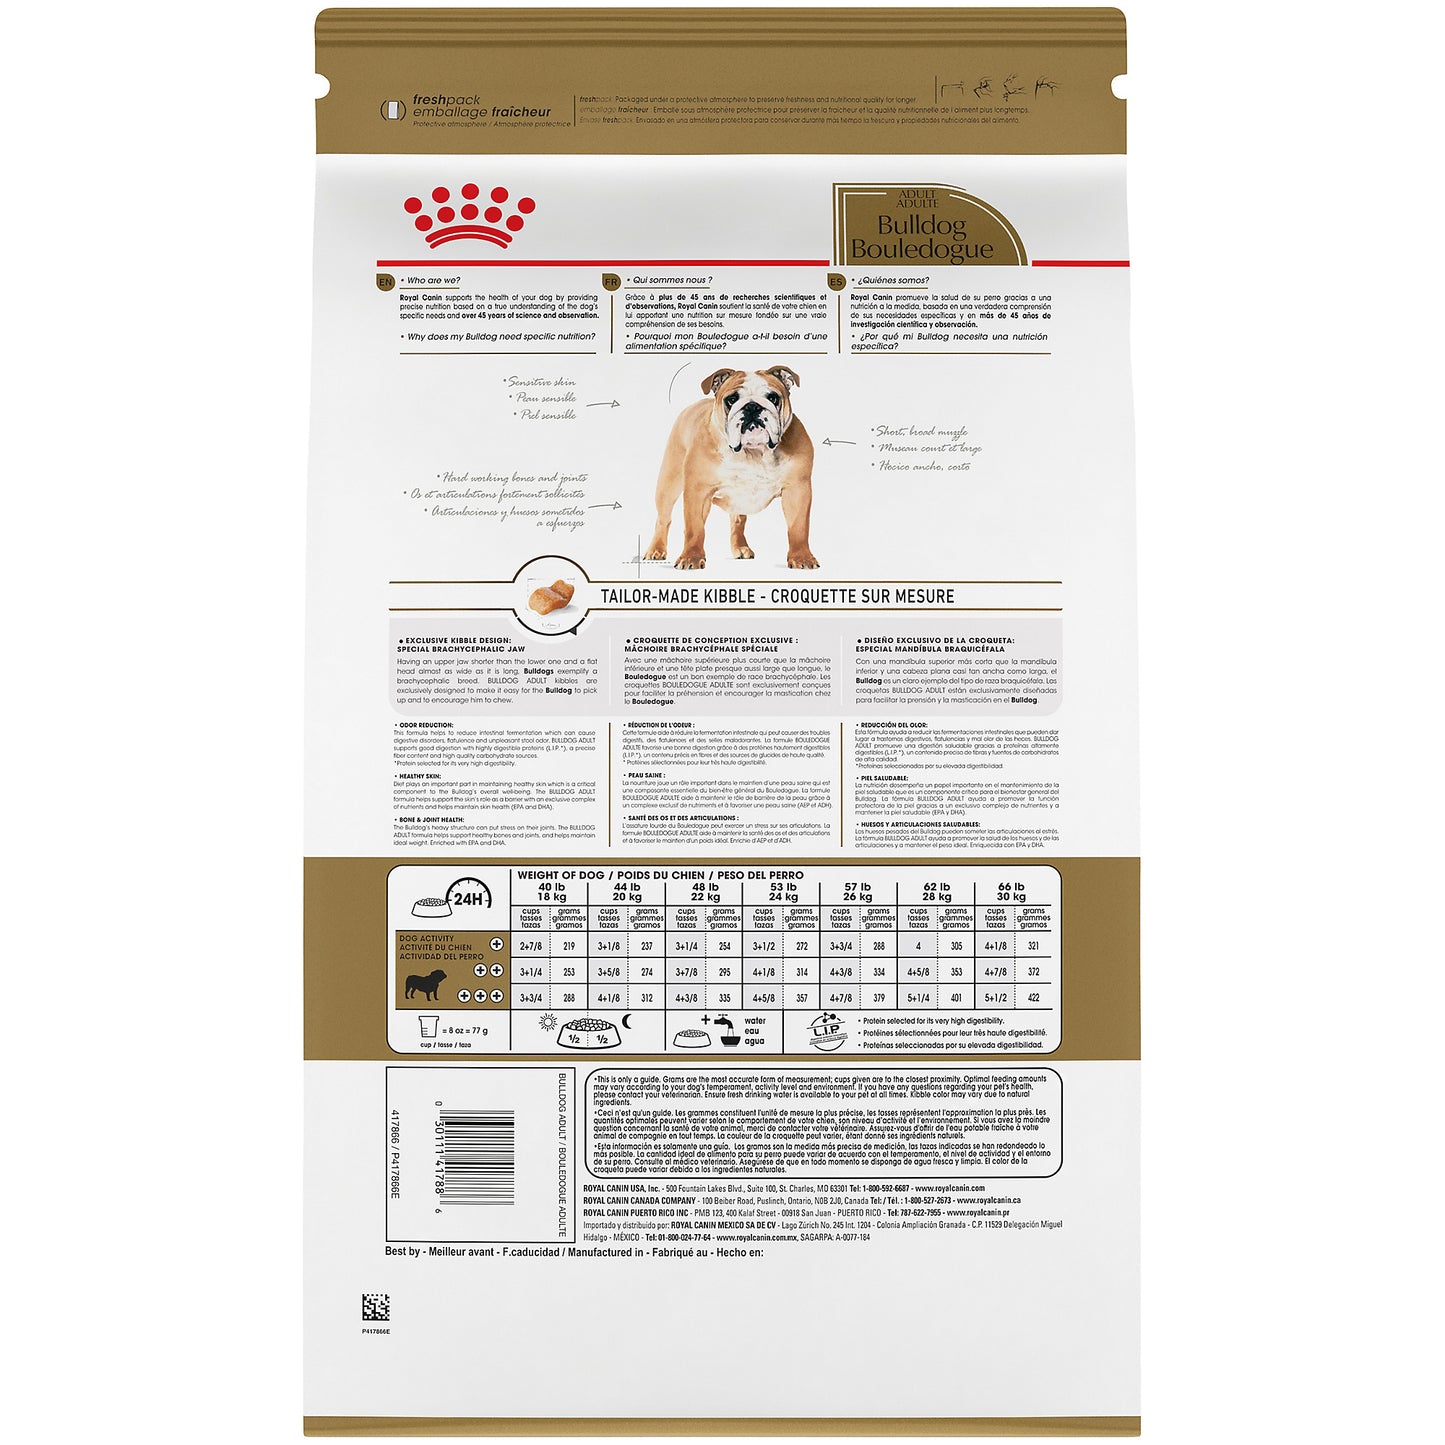 Royal Canin Bulldog Dog Food  Dog Food  | PetMax Canada